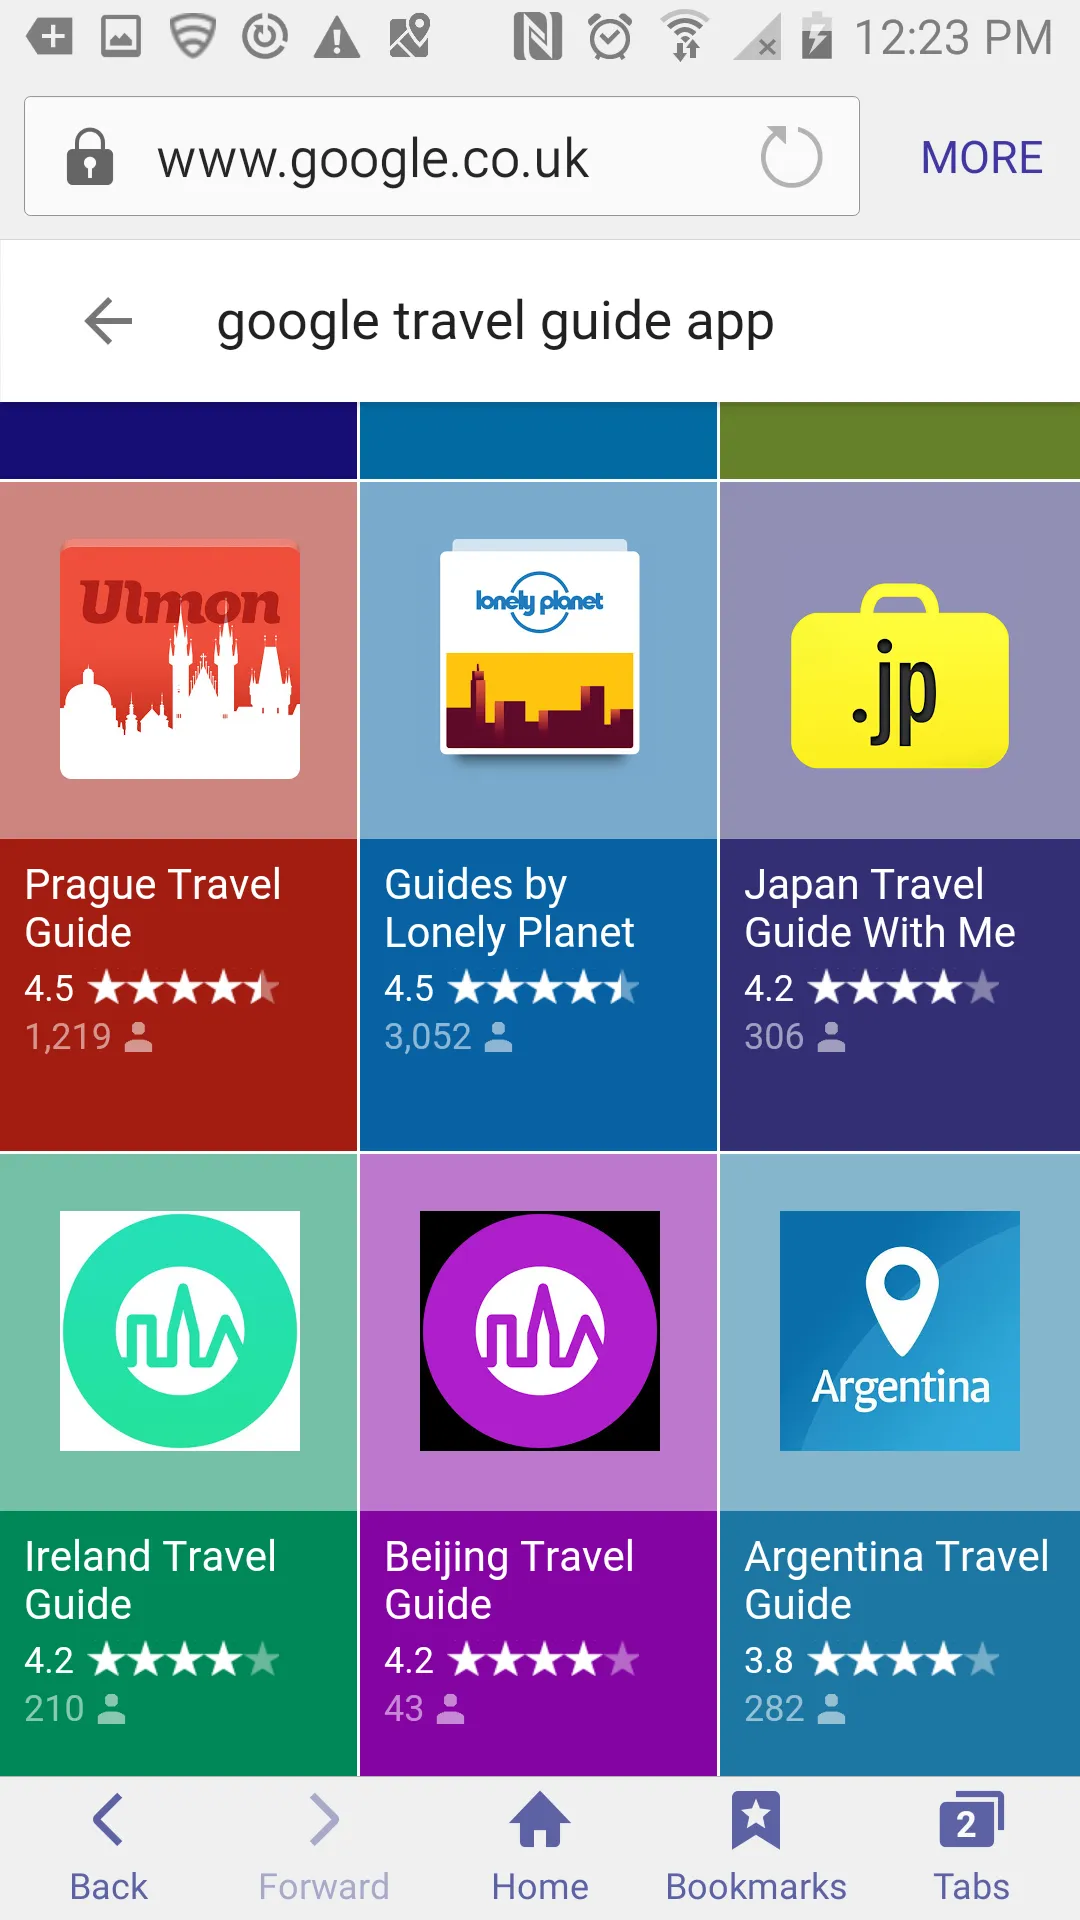 Google Travel Guide apps 4